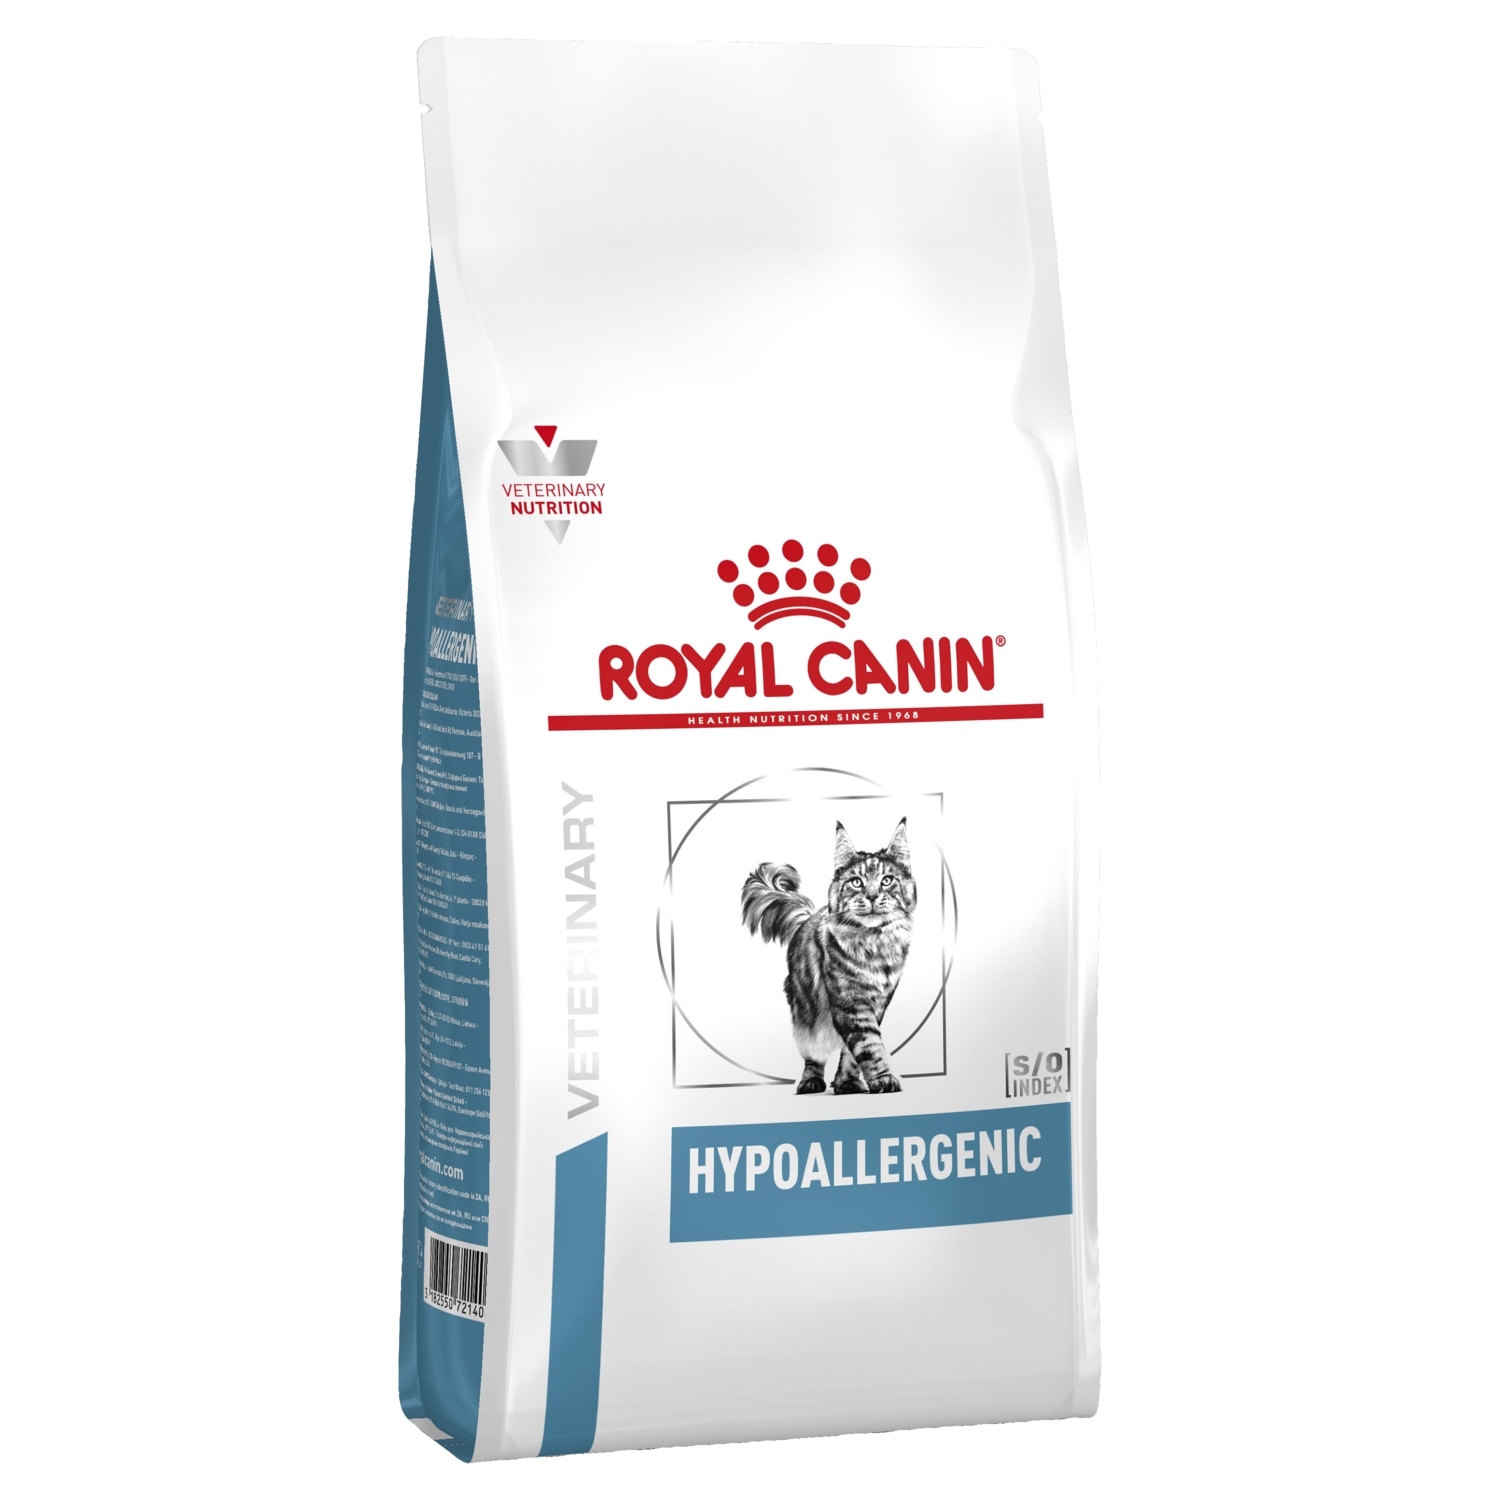 Royal Canin Feline Hypoallergenic Prescription Dry Cat Food 2.5Kg eBay